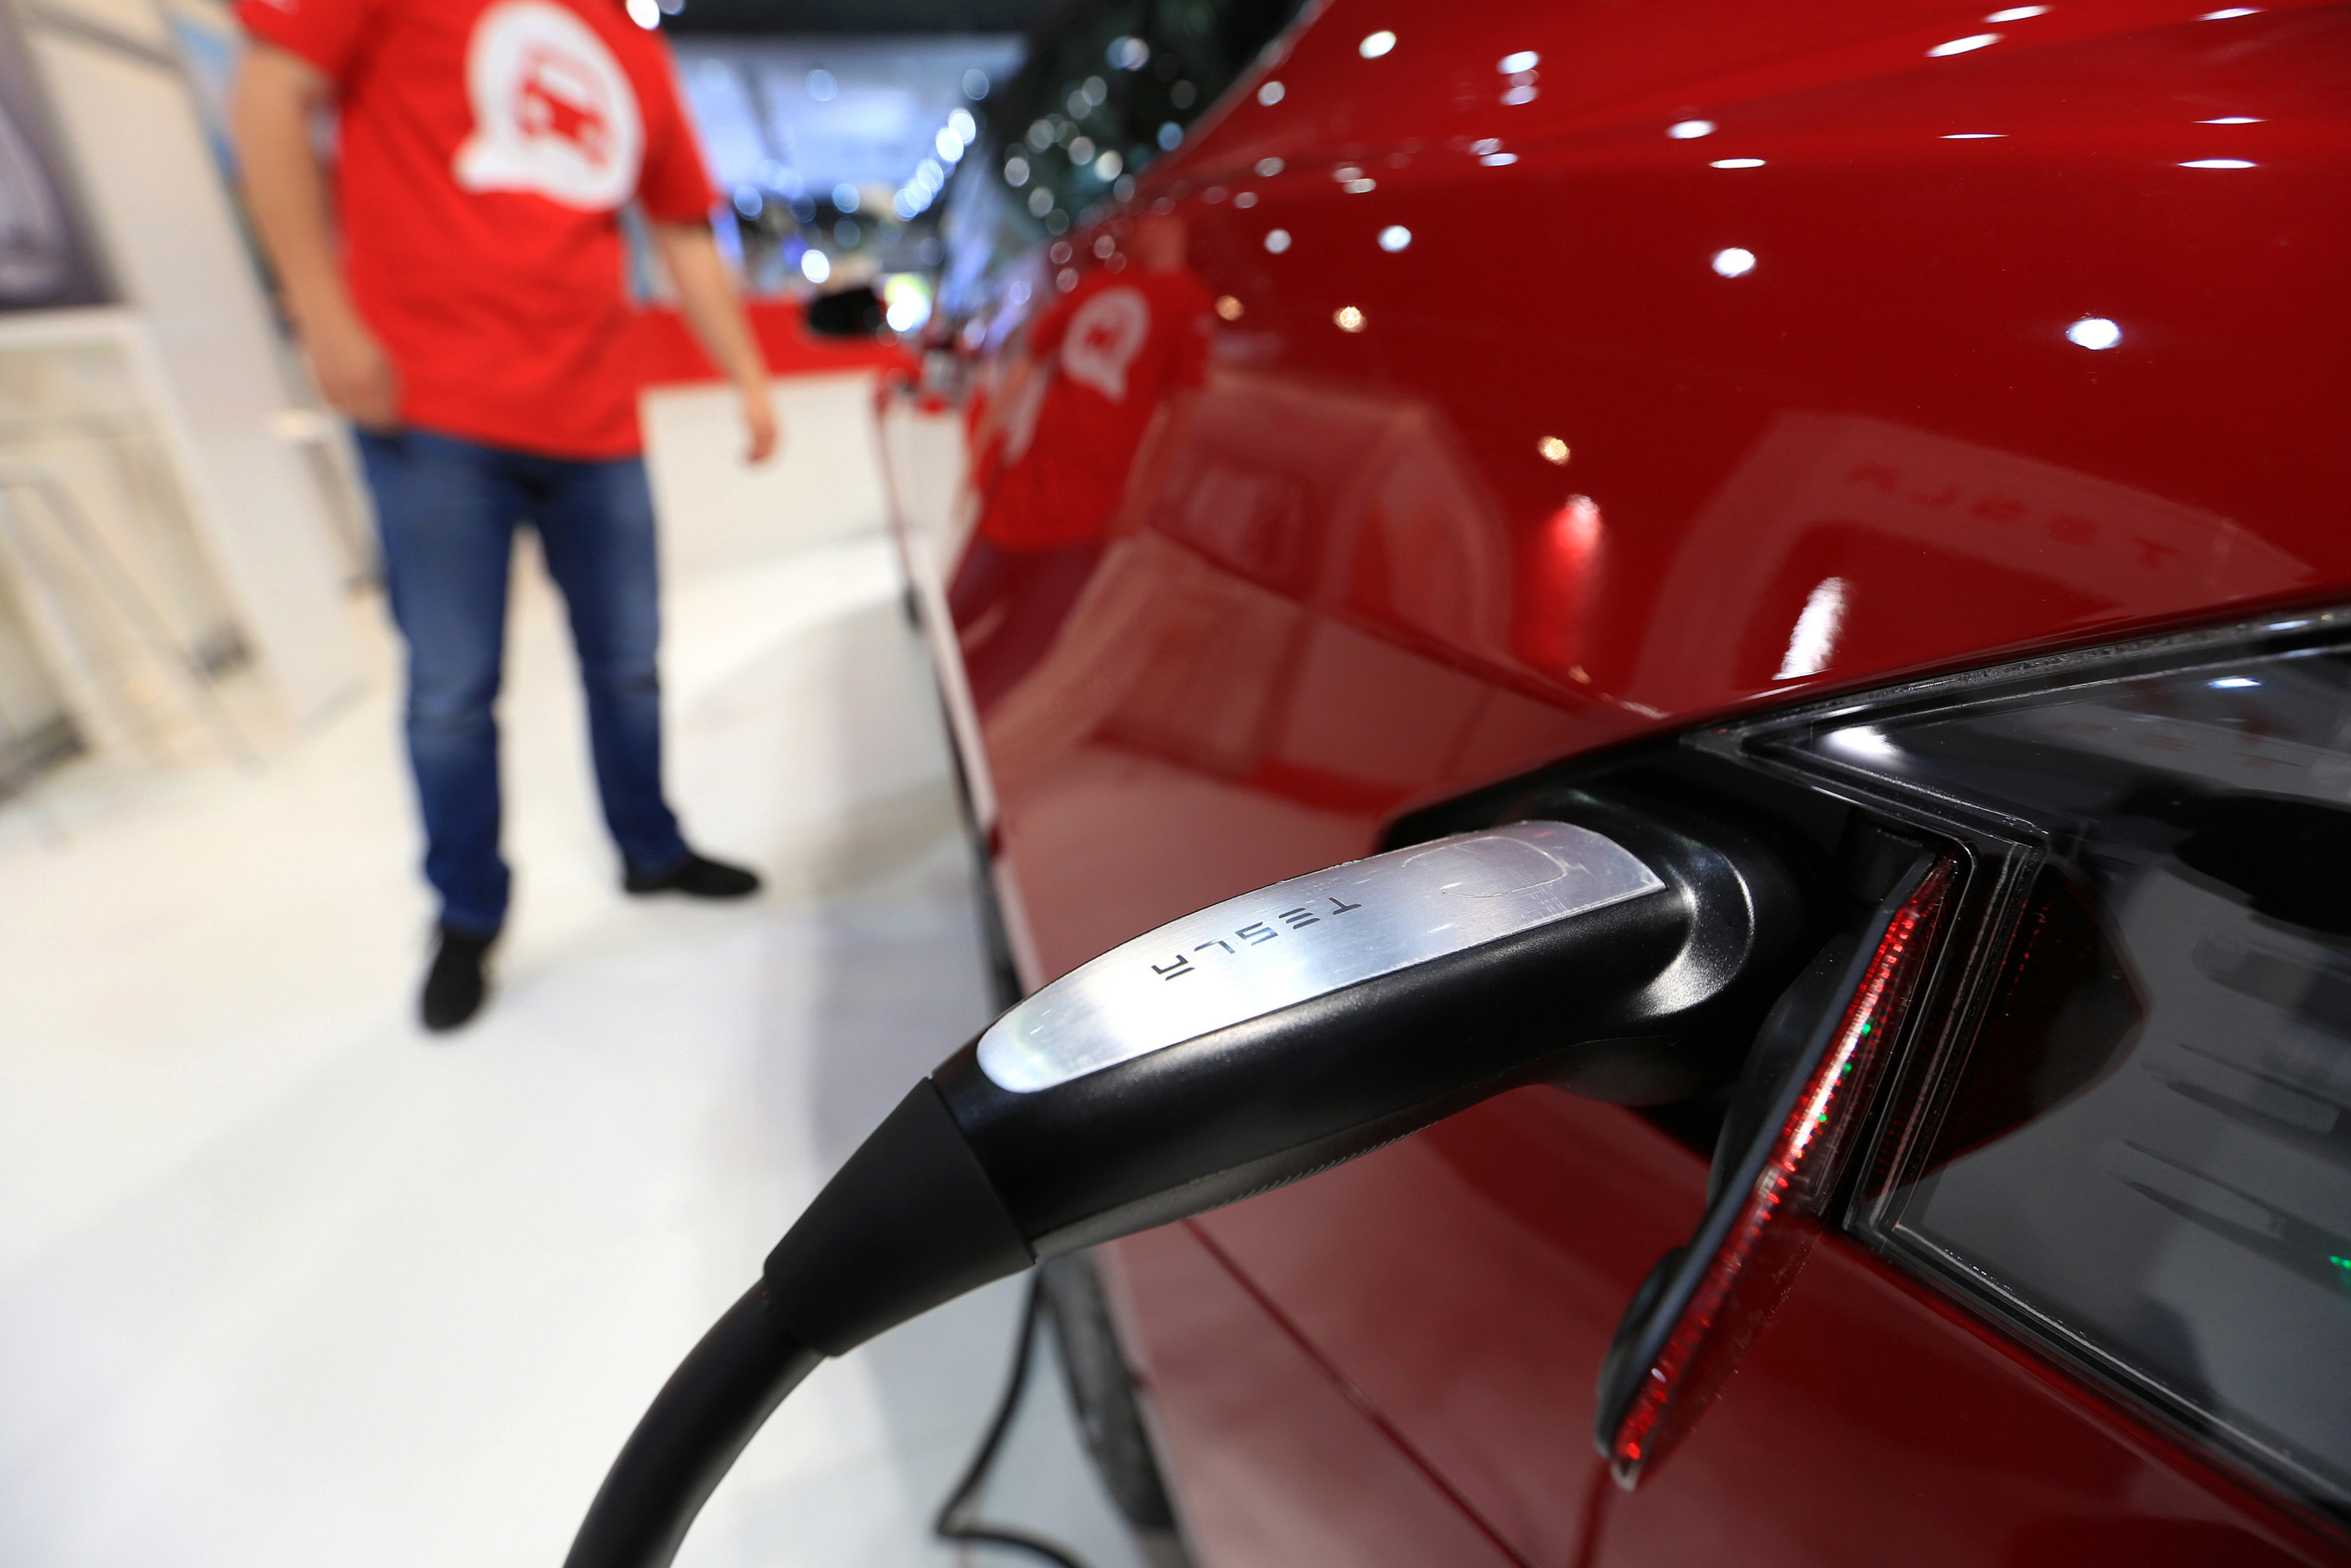 Tesla releases $550 AC charger with standard plug, not Tesla's plug